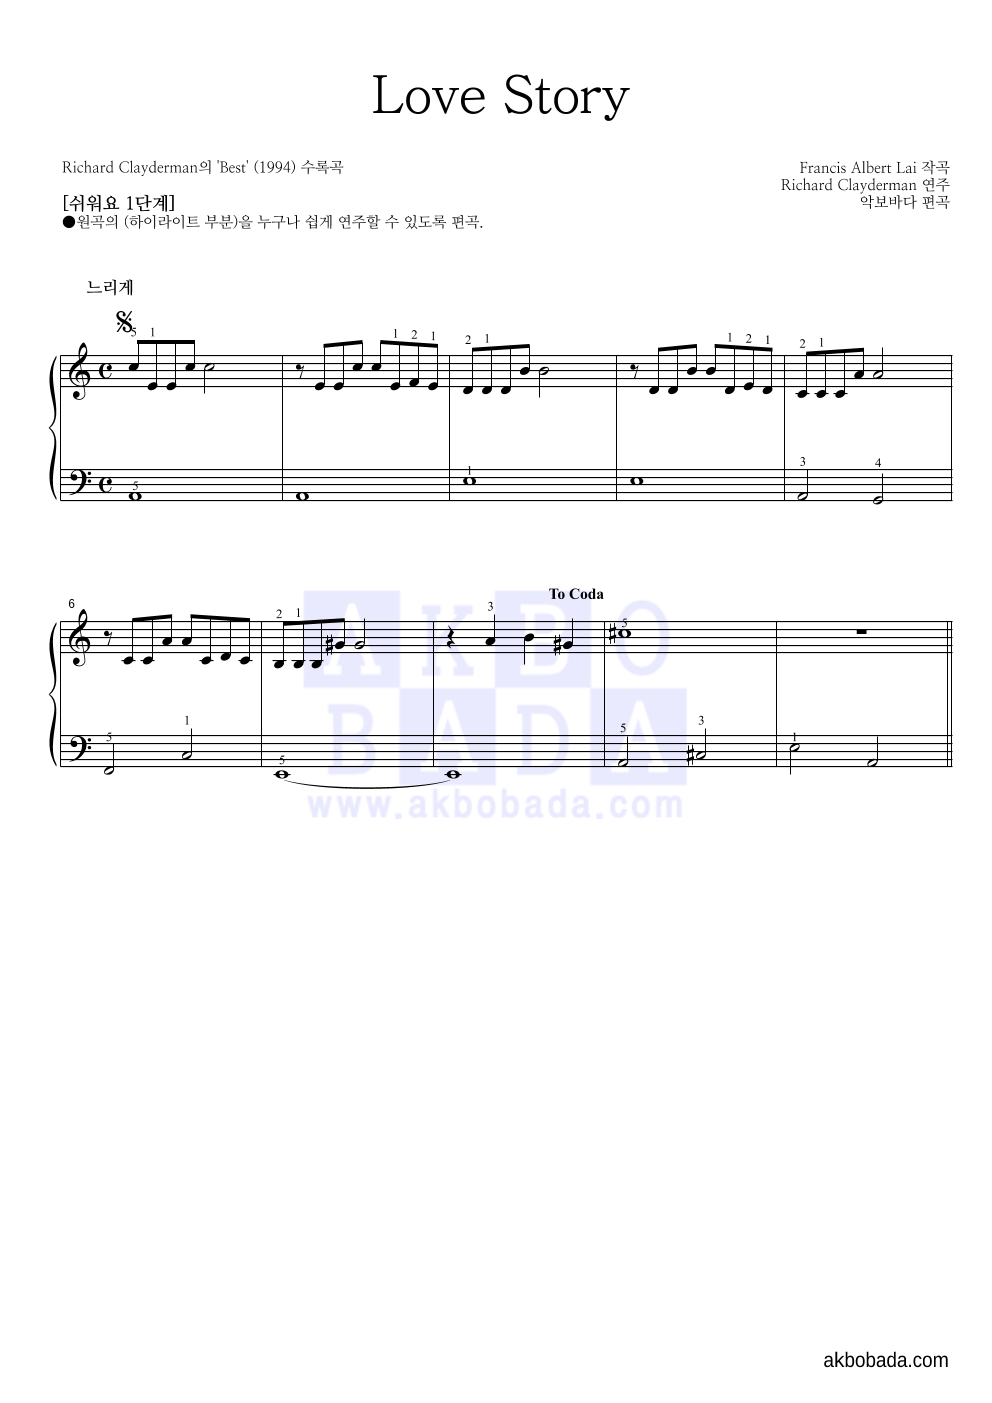 Richard Clayderman  - Love Story 피아노2단-쉬워요 악보 